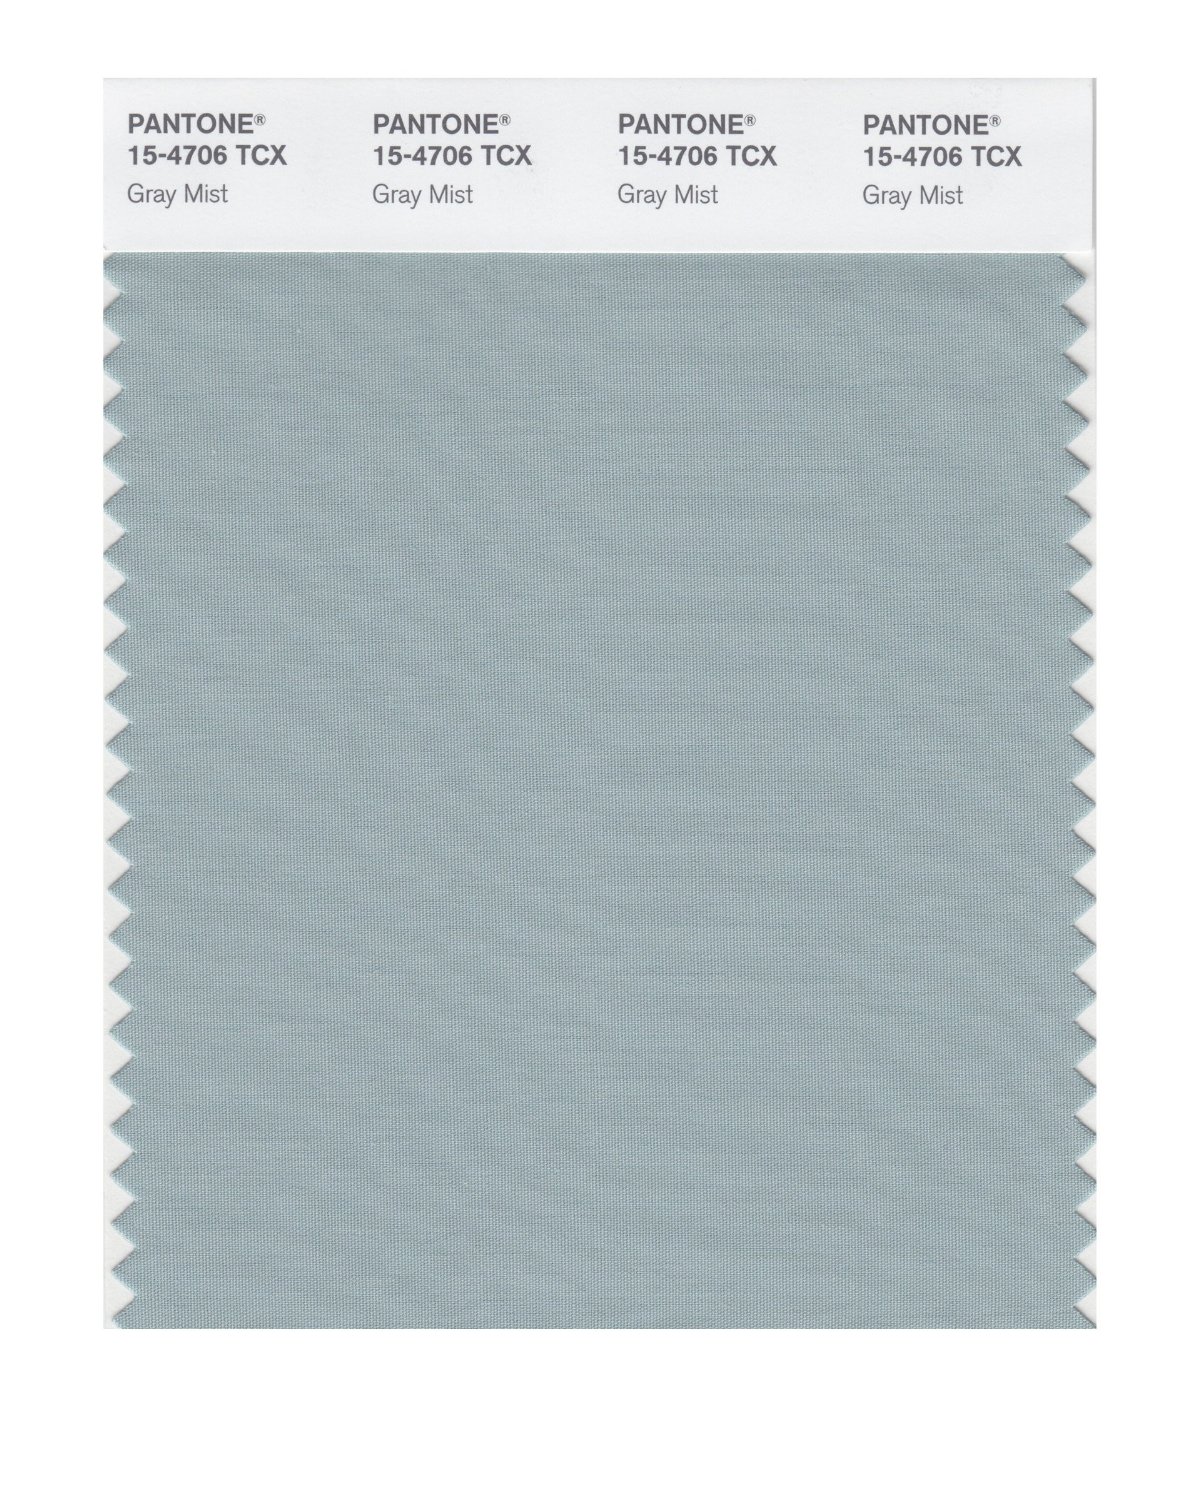 Pantone Cotton Swatch 15-4706 Gray Mist